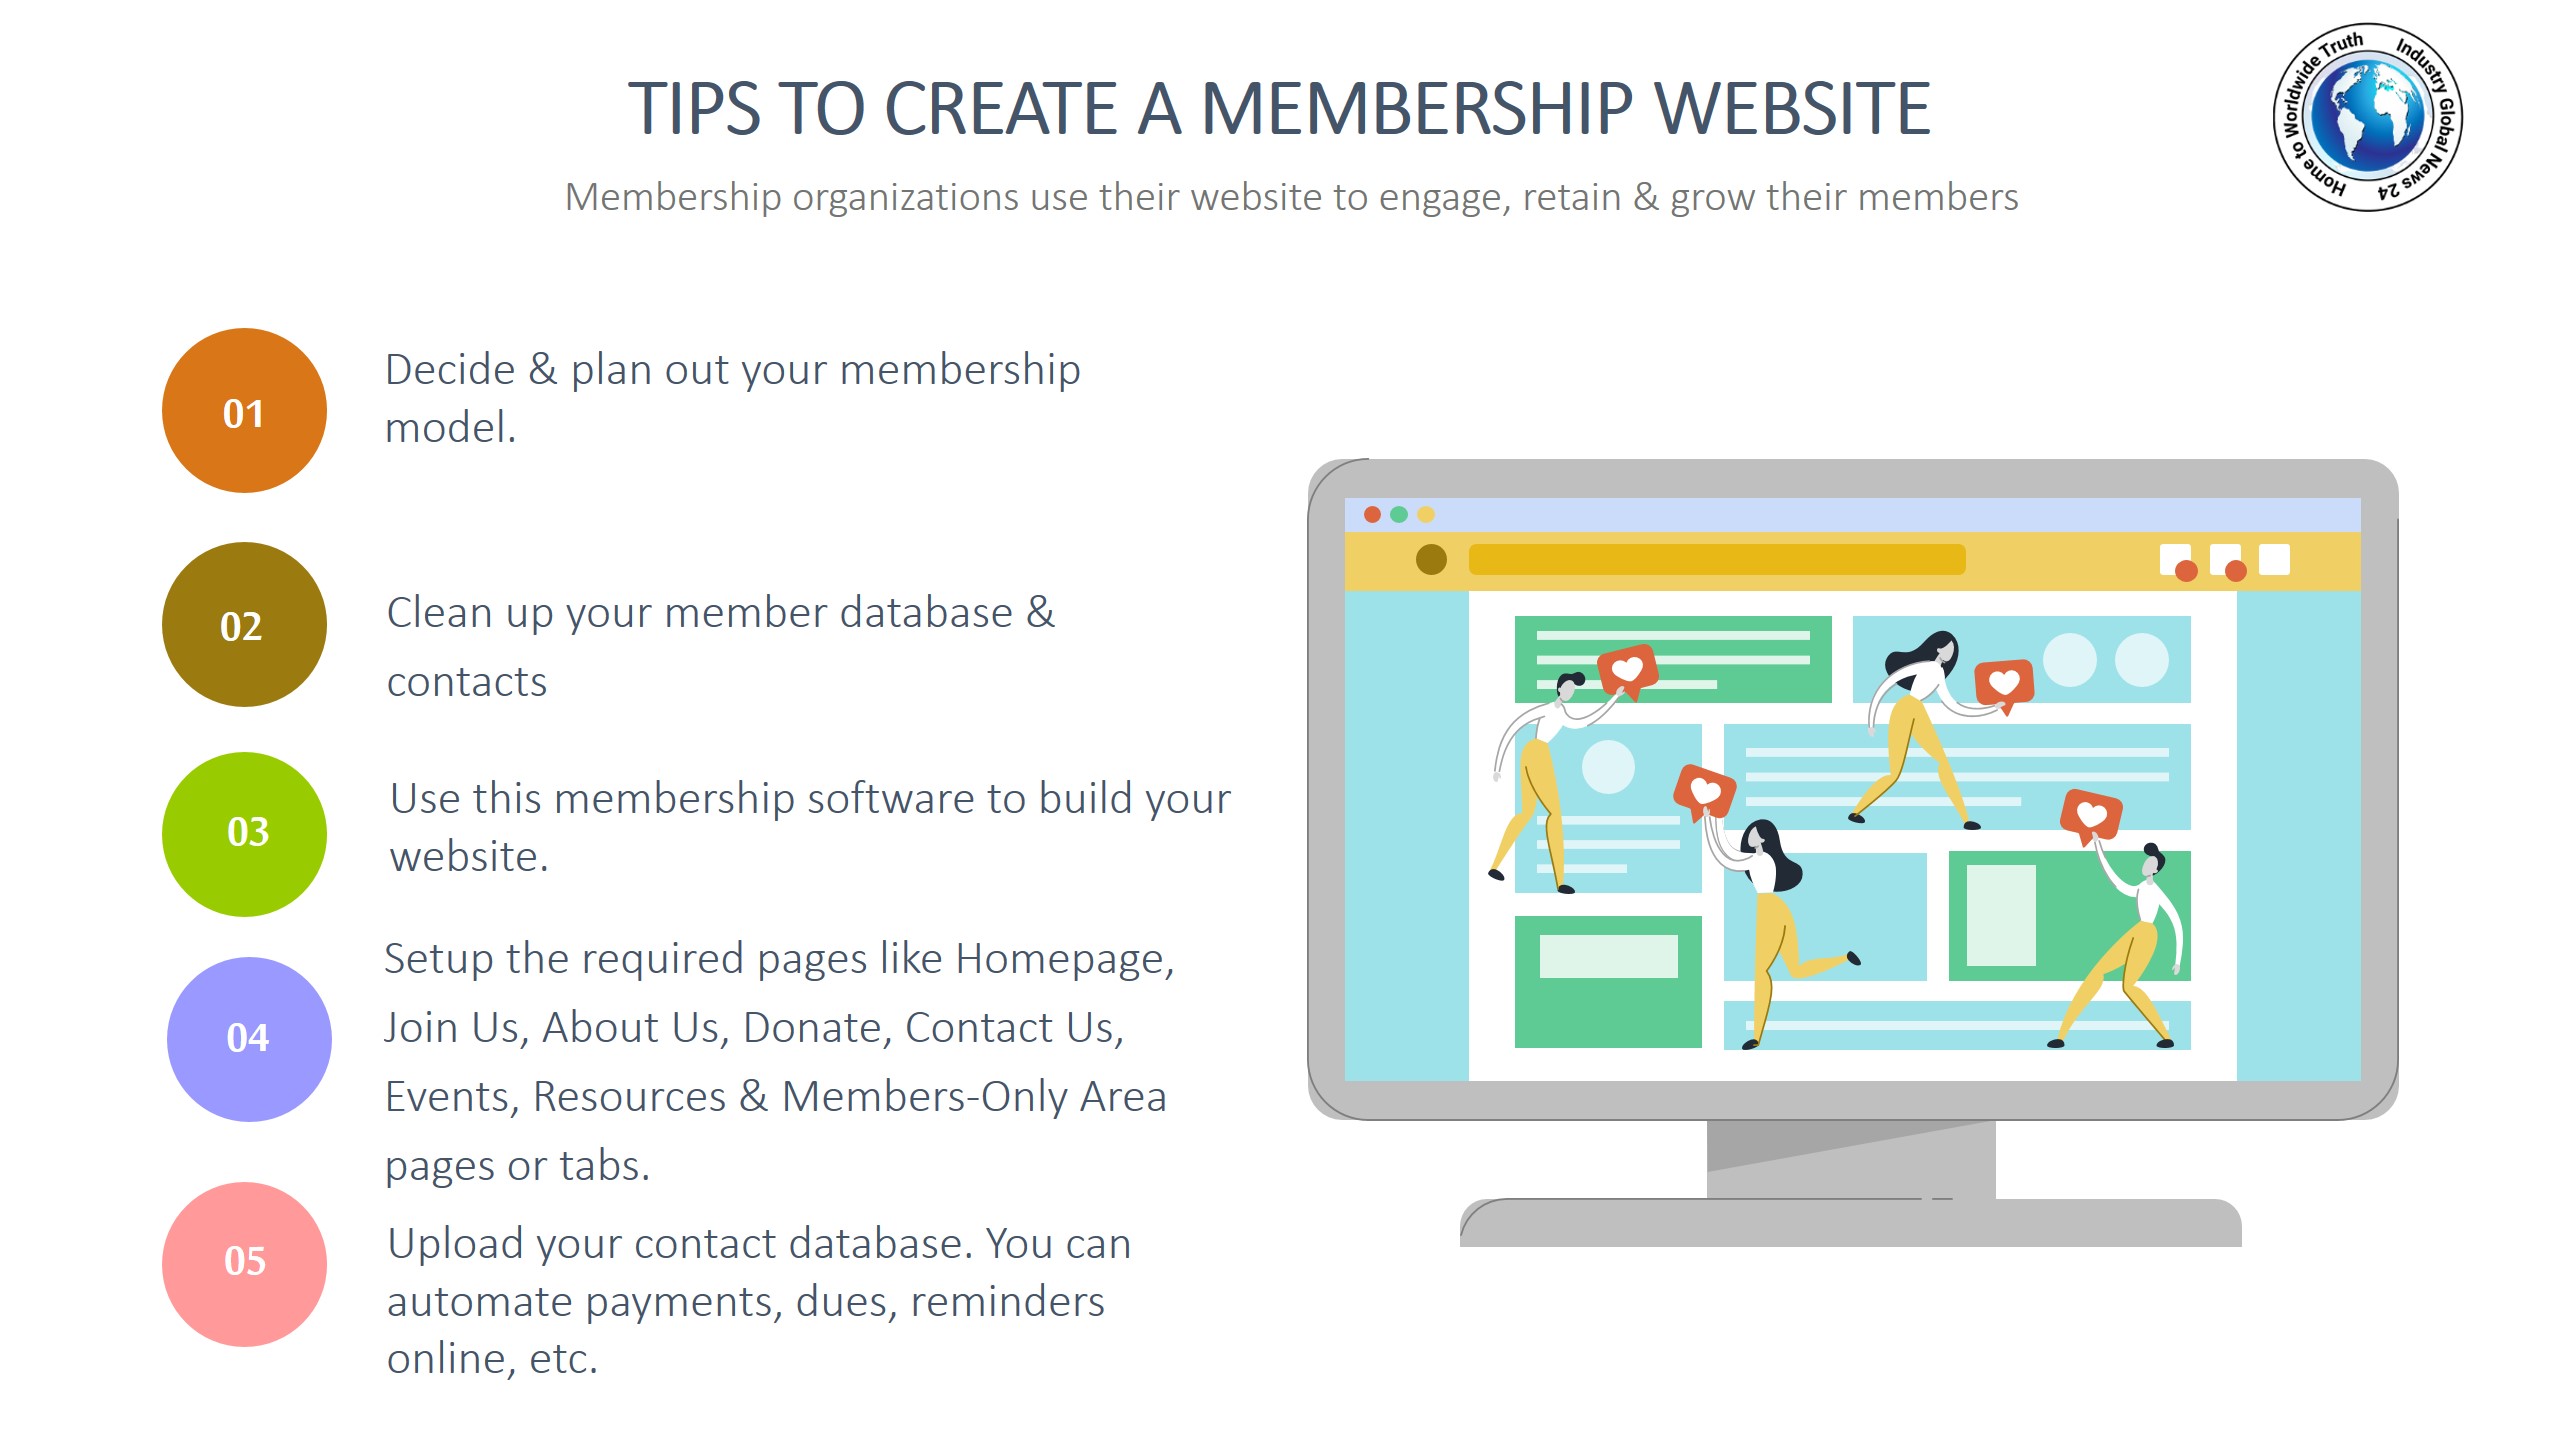 Tips to create a membership website